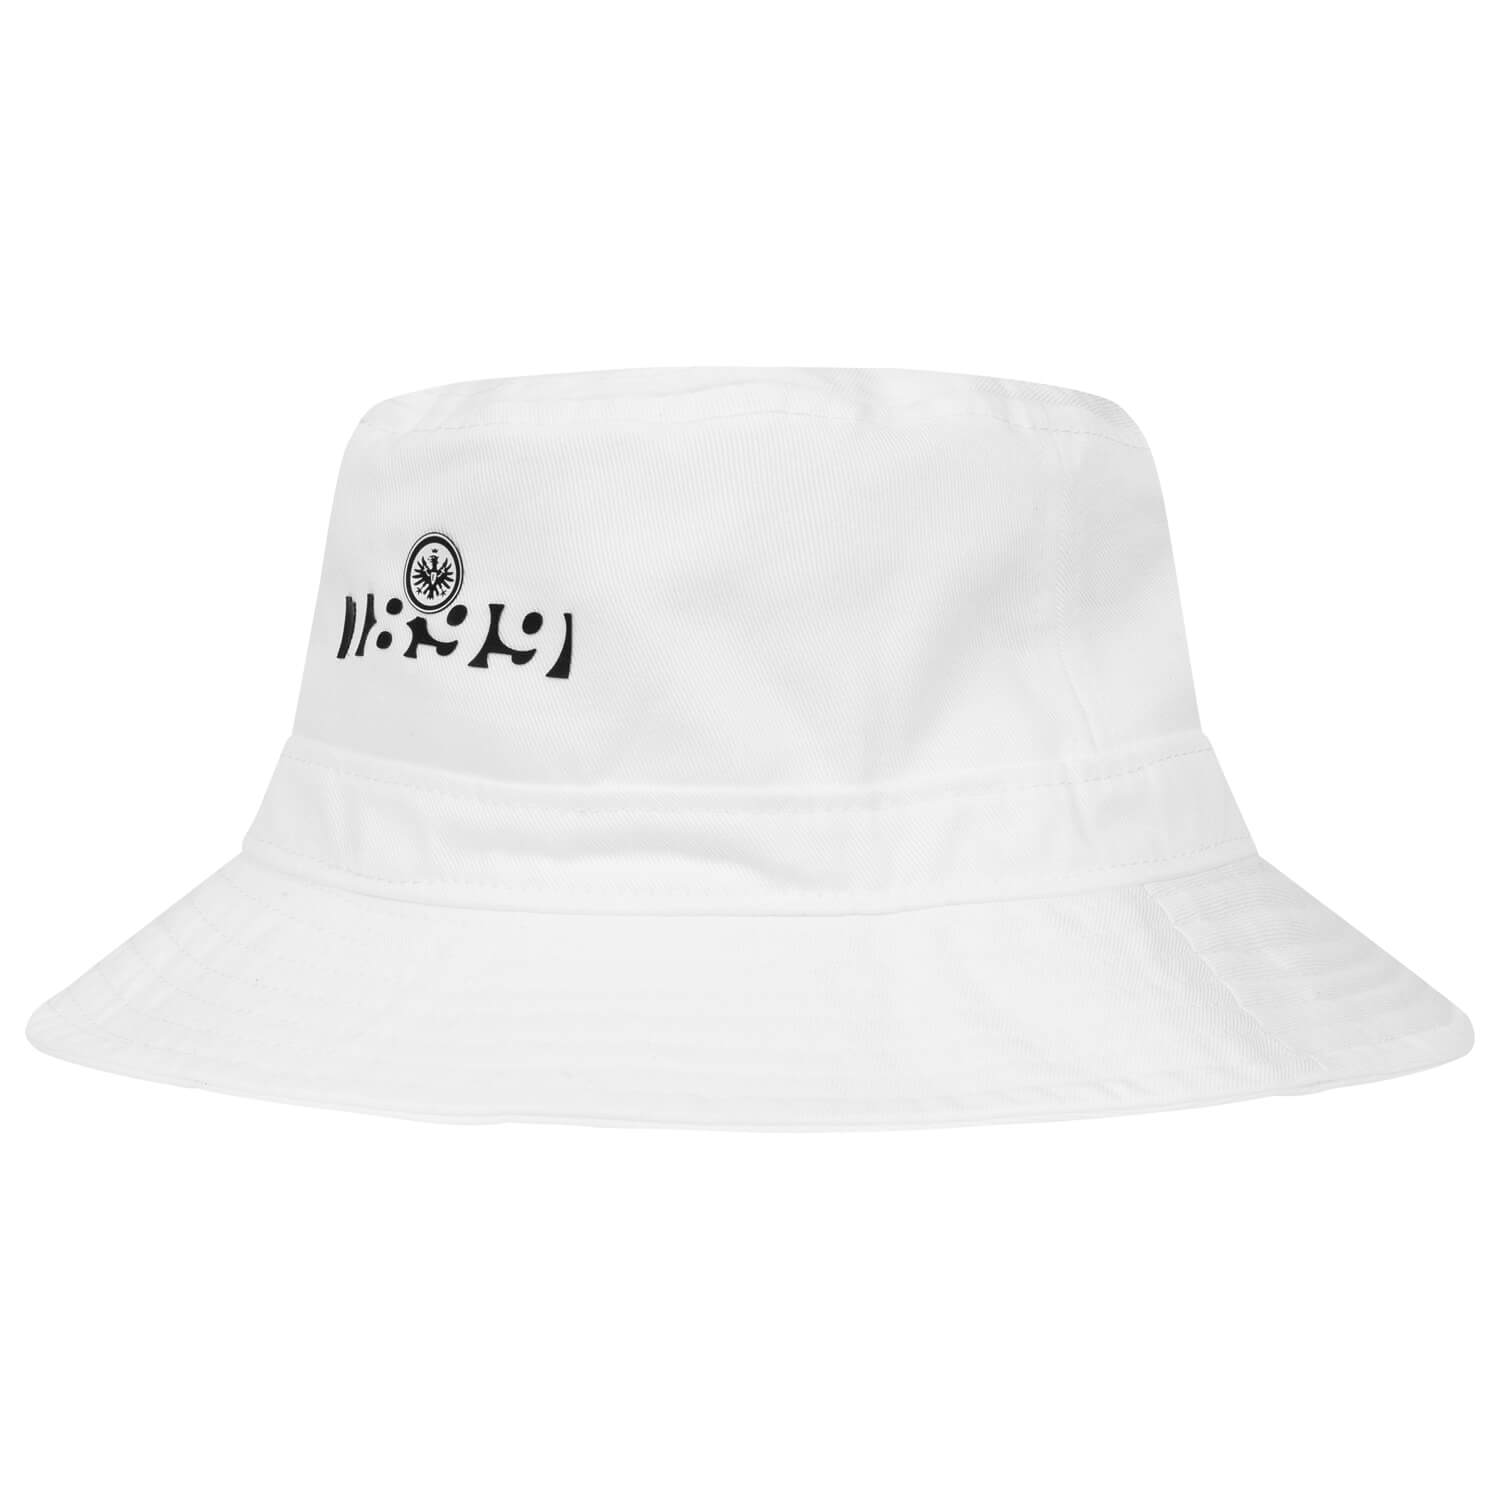 Bild 3: Nike Bucket Hat 1899 White